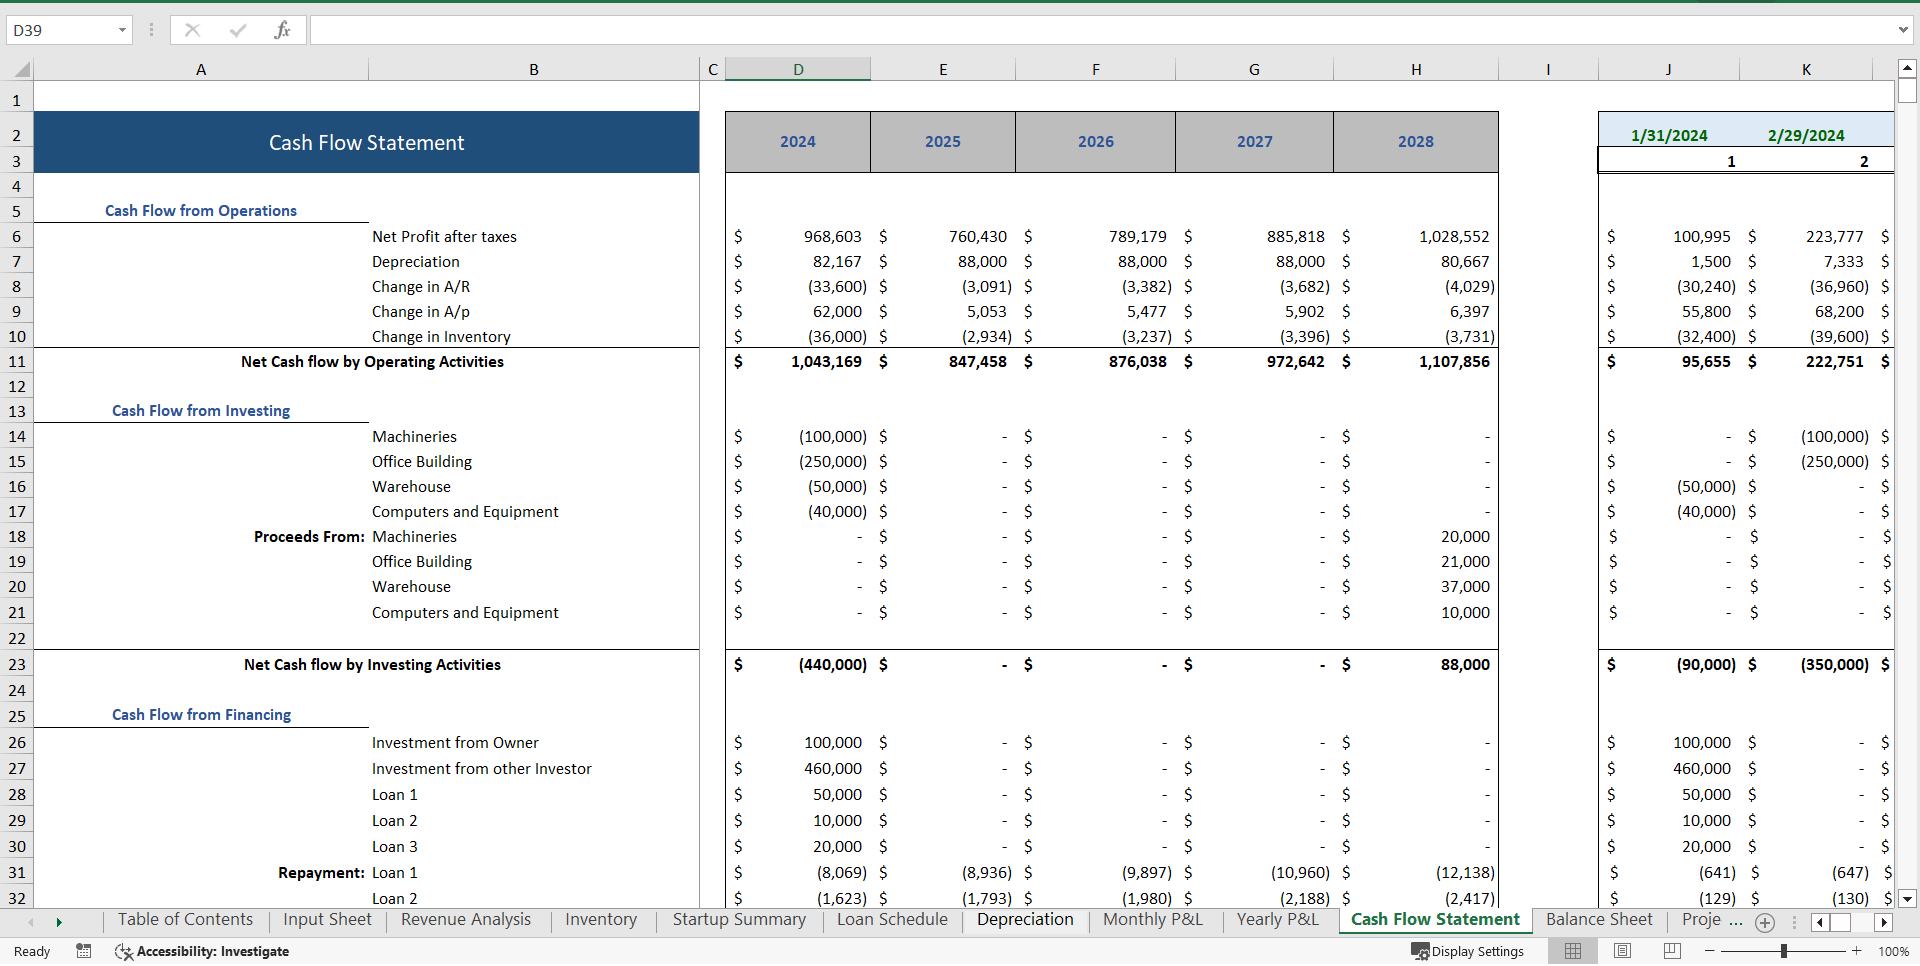 Liquor Store Excel Financial Model Template (Excel template (XLSX)) Preview Image